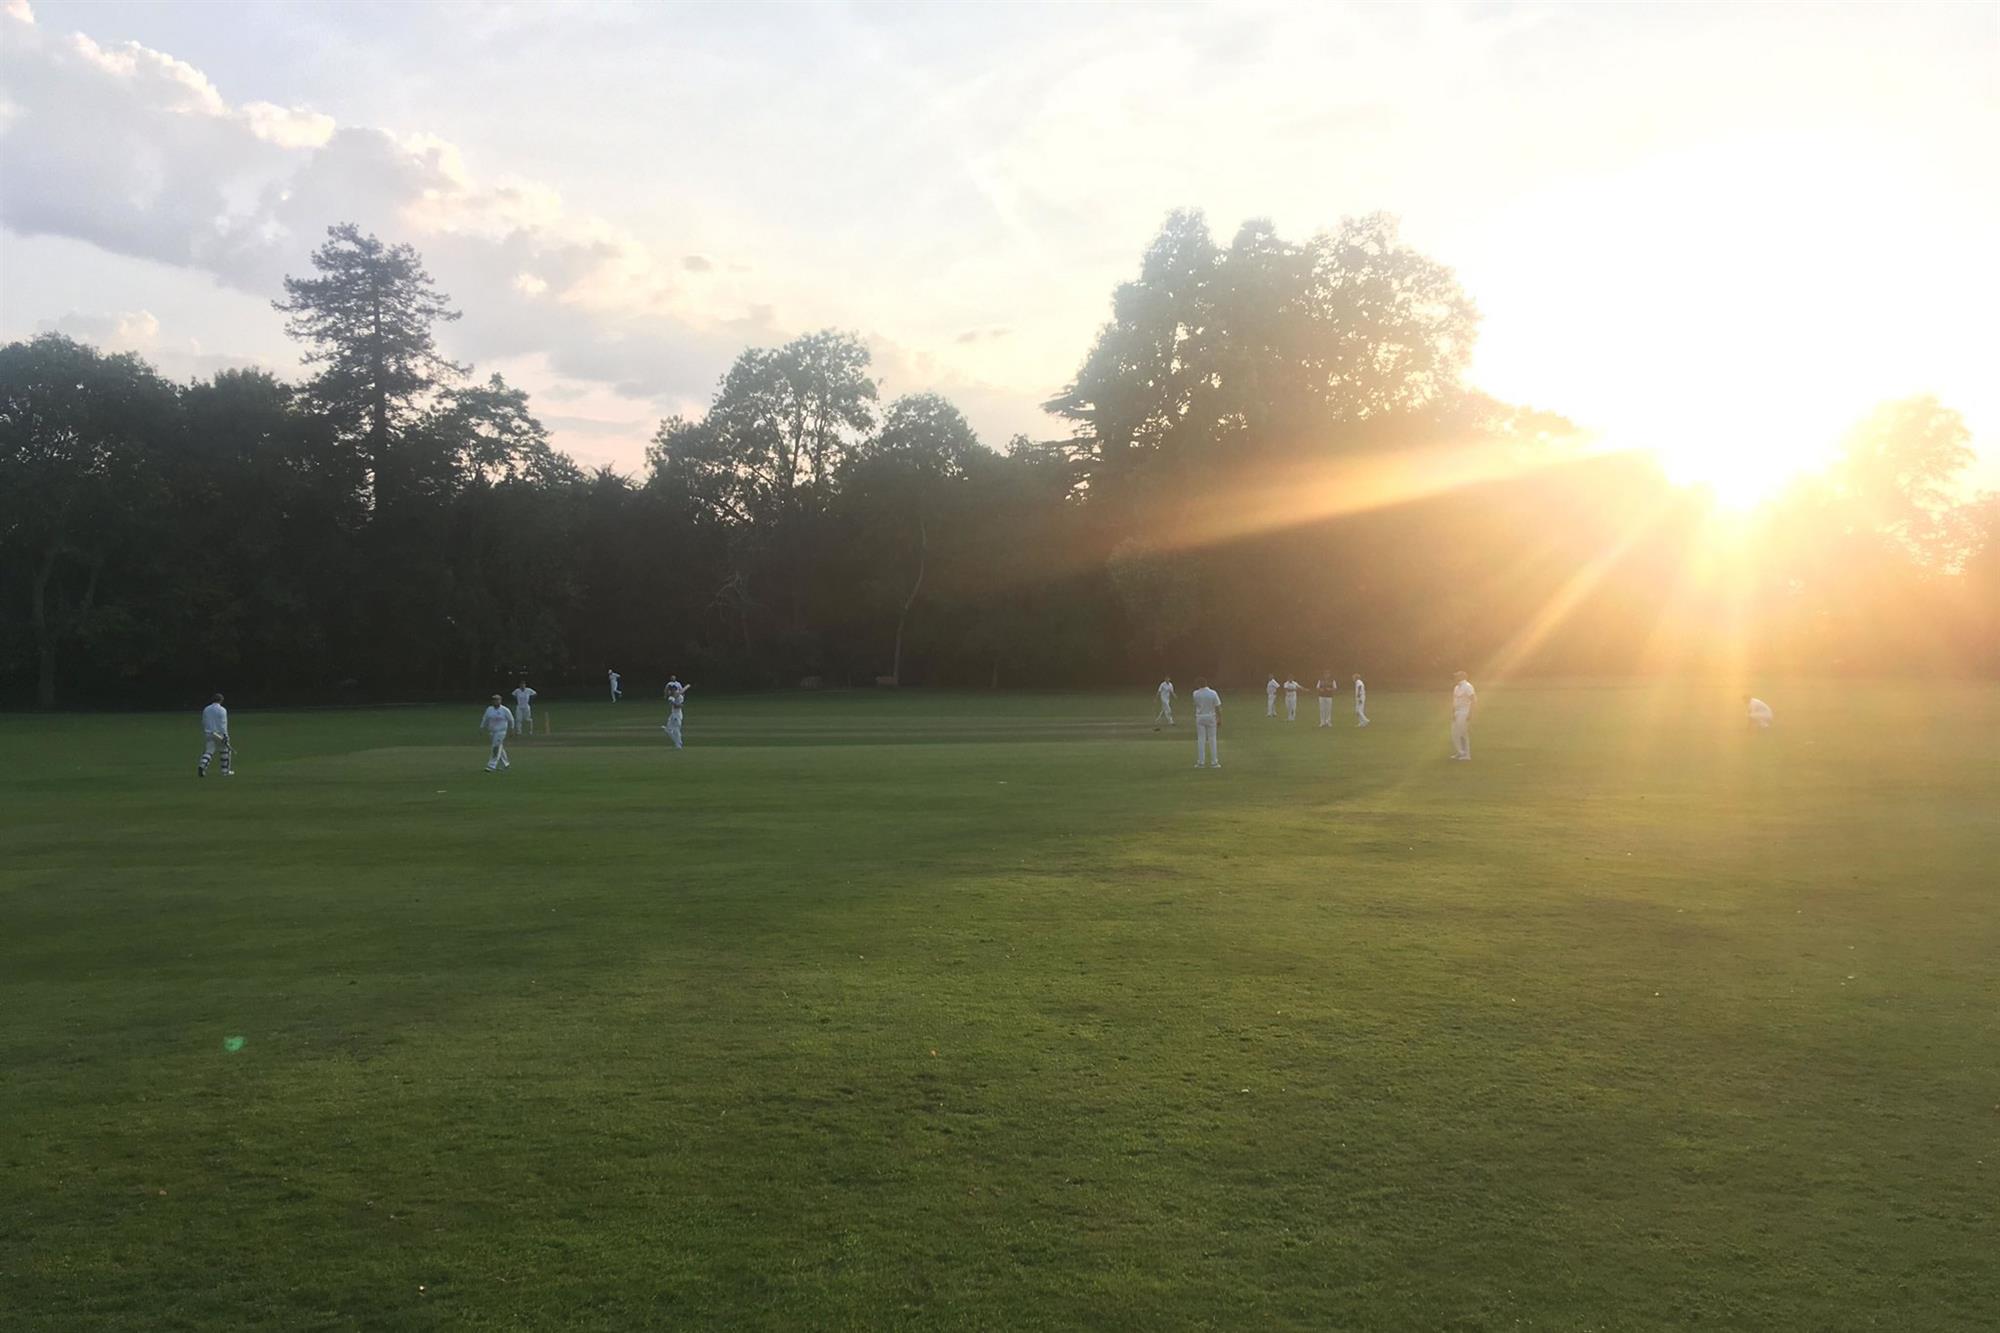 Birlingham Cricket Club